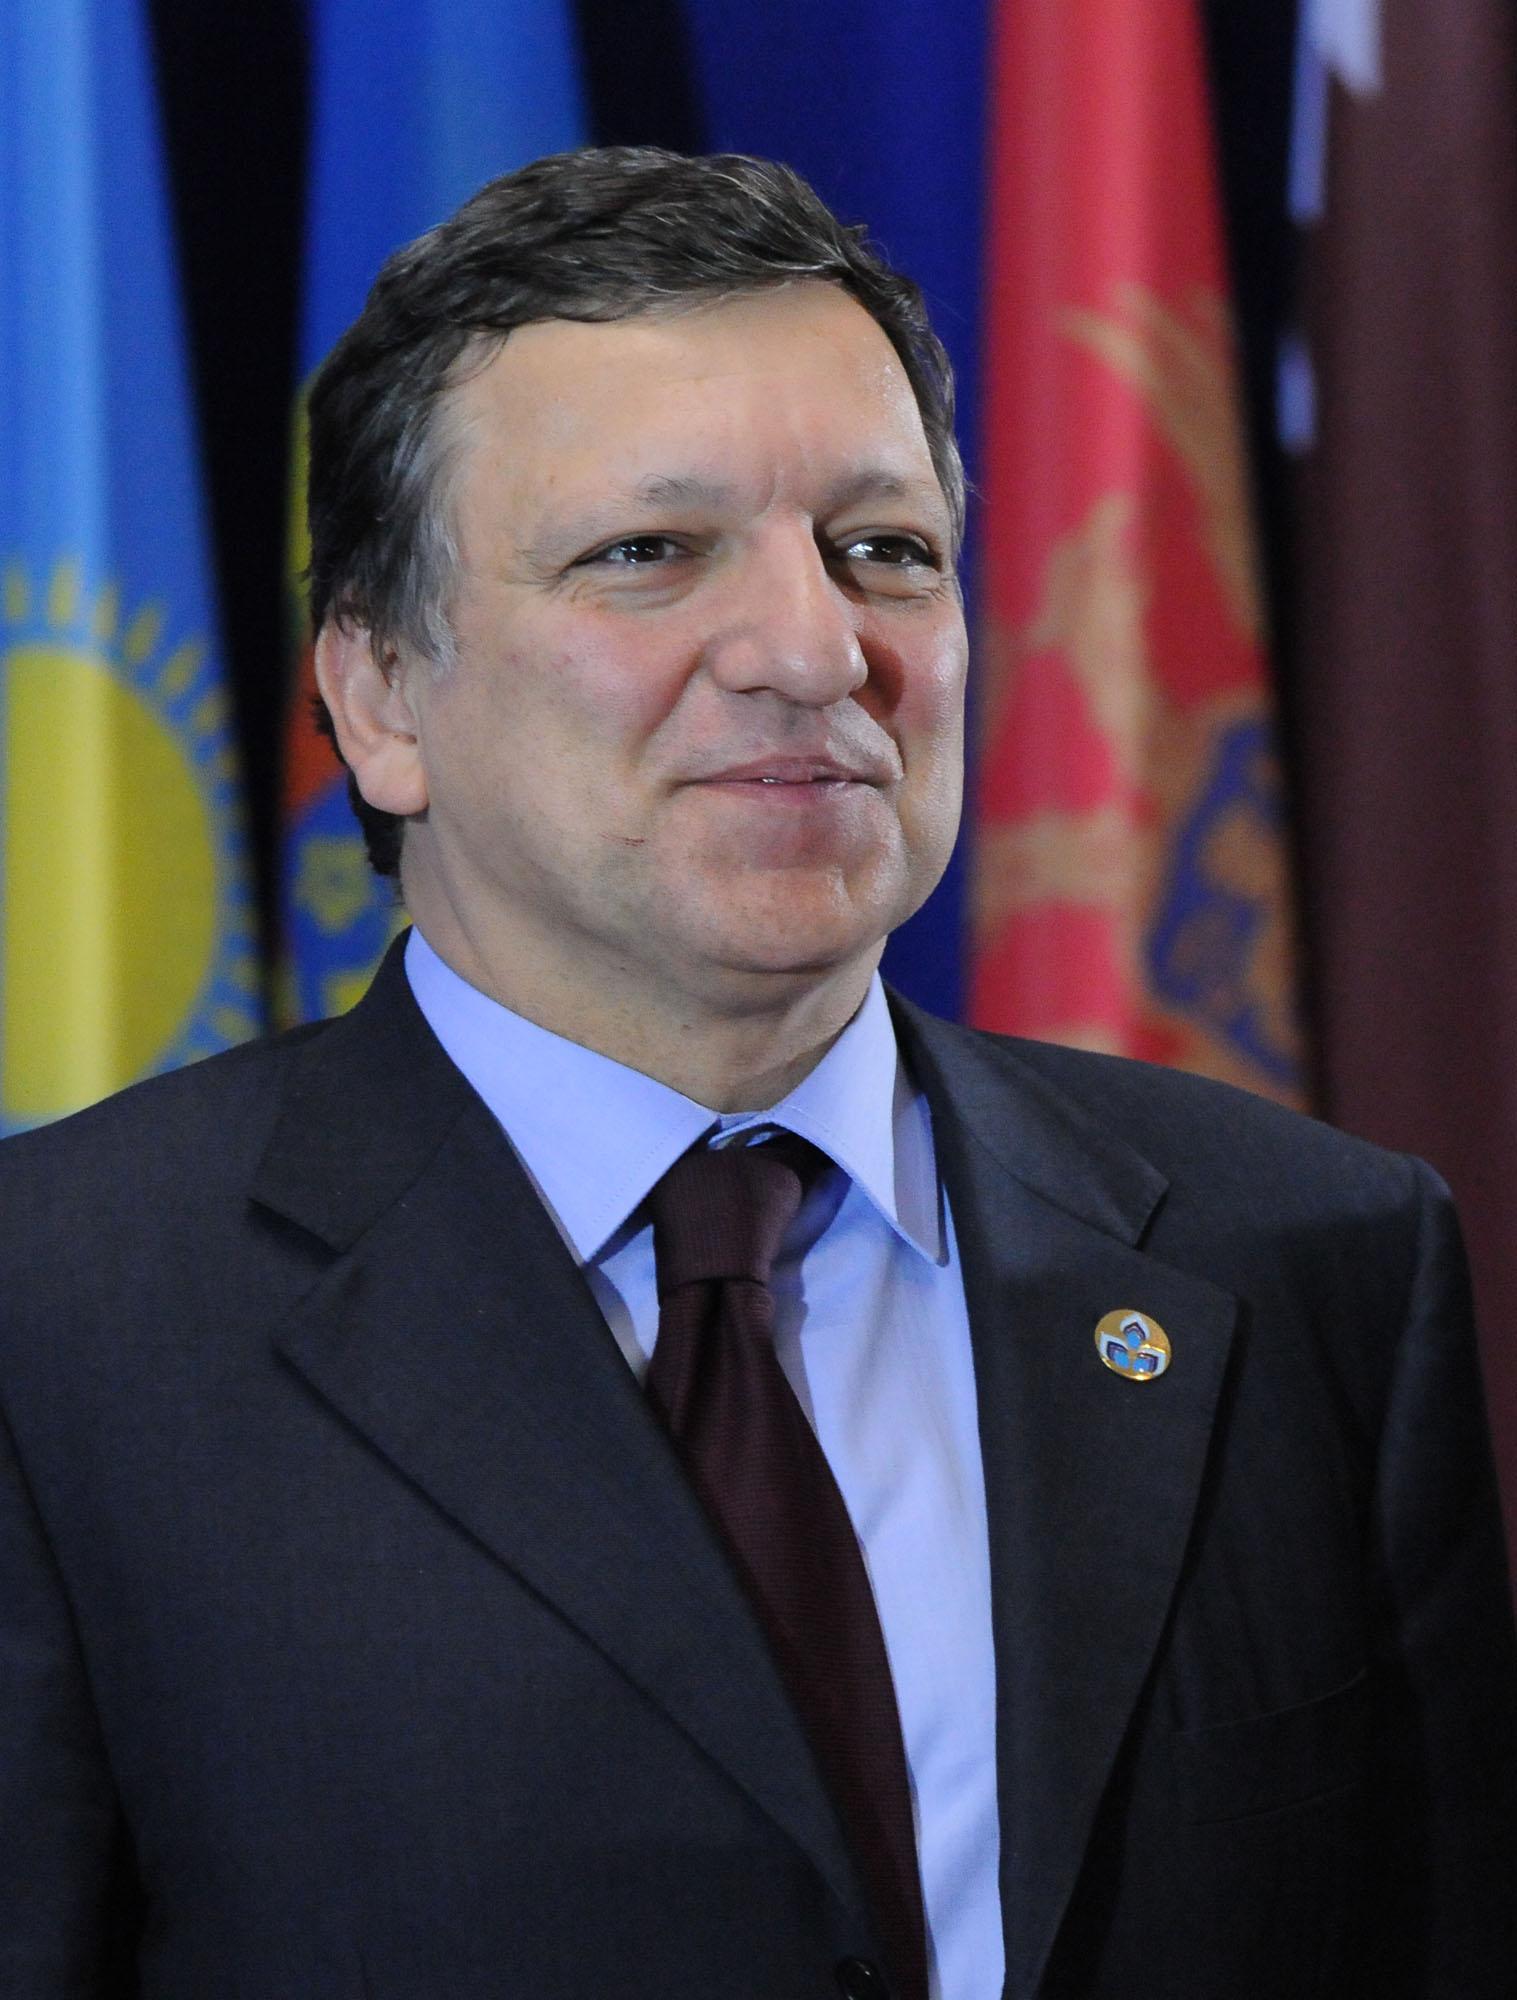 Барозу подкрепи критиките срещу Франция